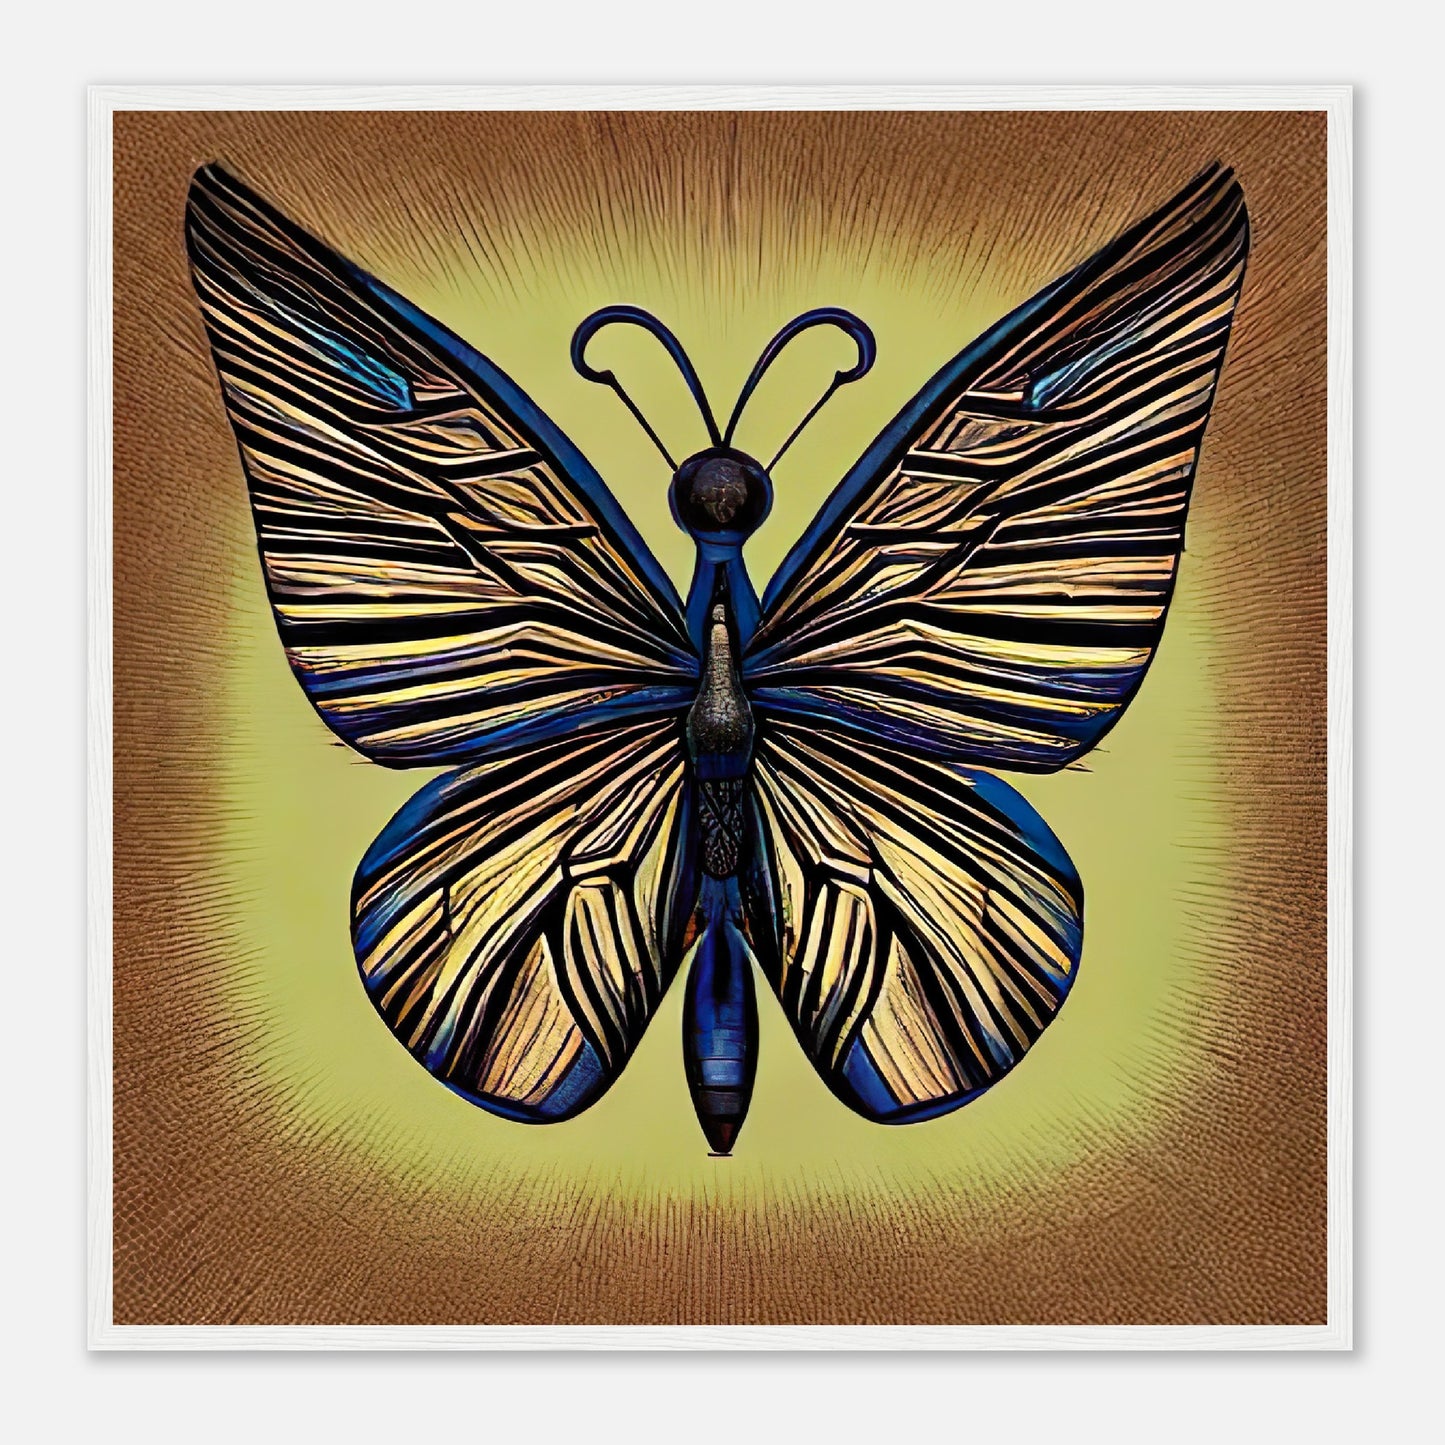 Gerahmtes Premium-Poster - Schmetterling - Digitaler Stil, KI-Kunst - RolConArt, Digitalkunst - Kreative Vielfalt, 70x70-cm-28x28-Weiß